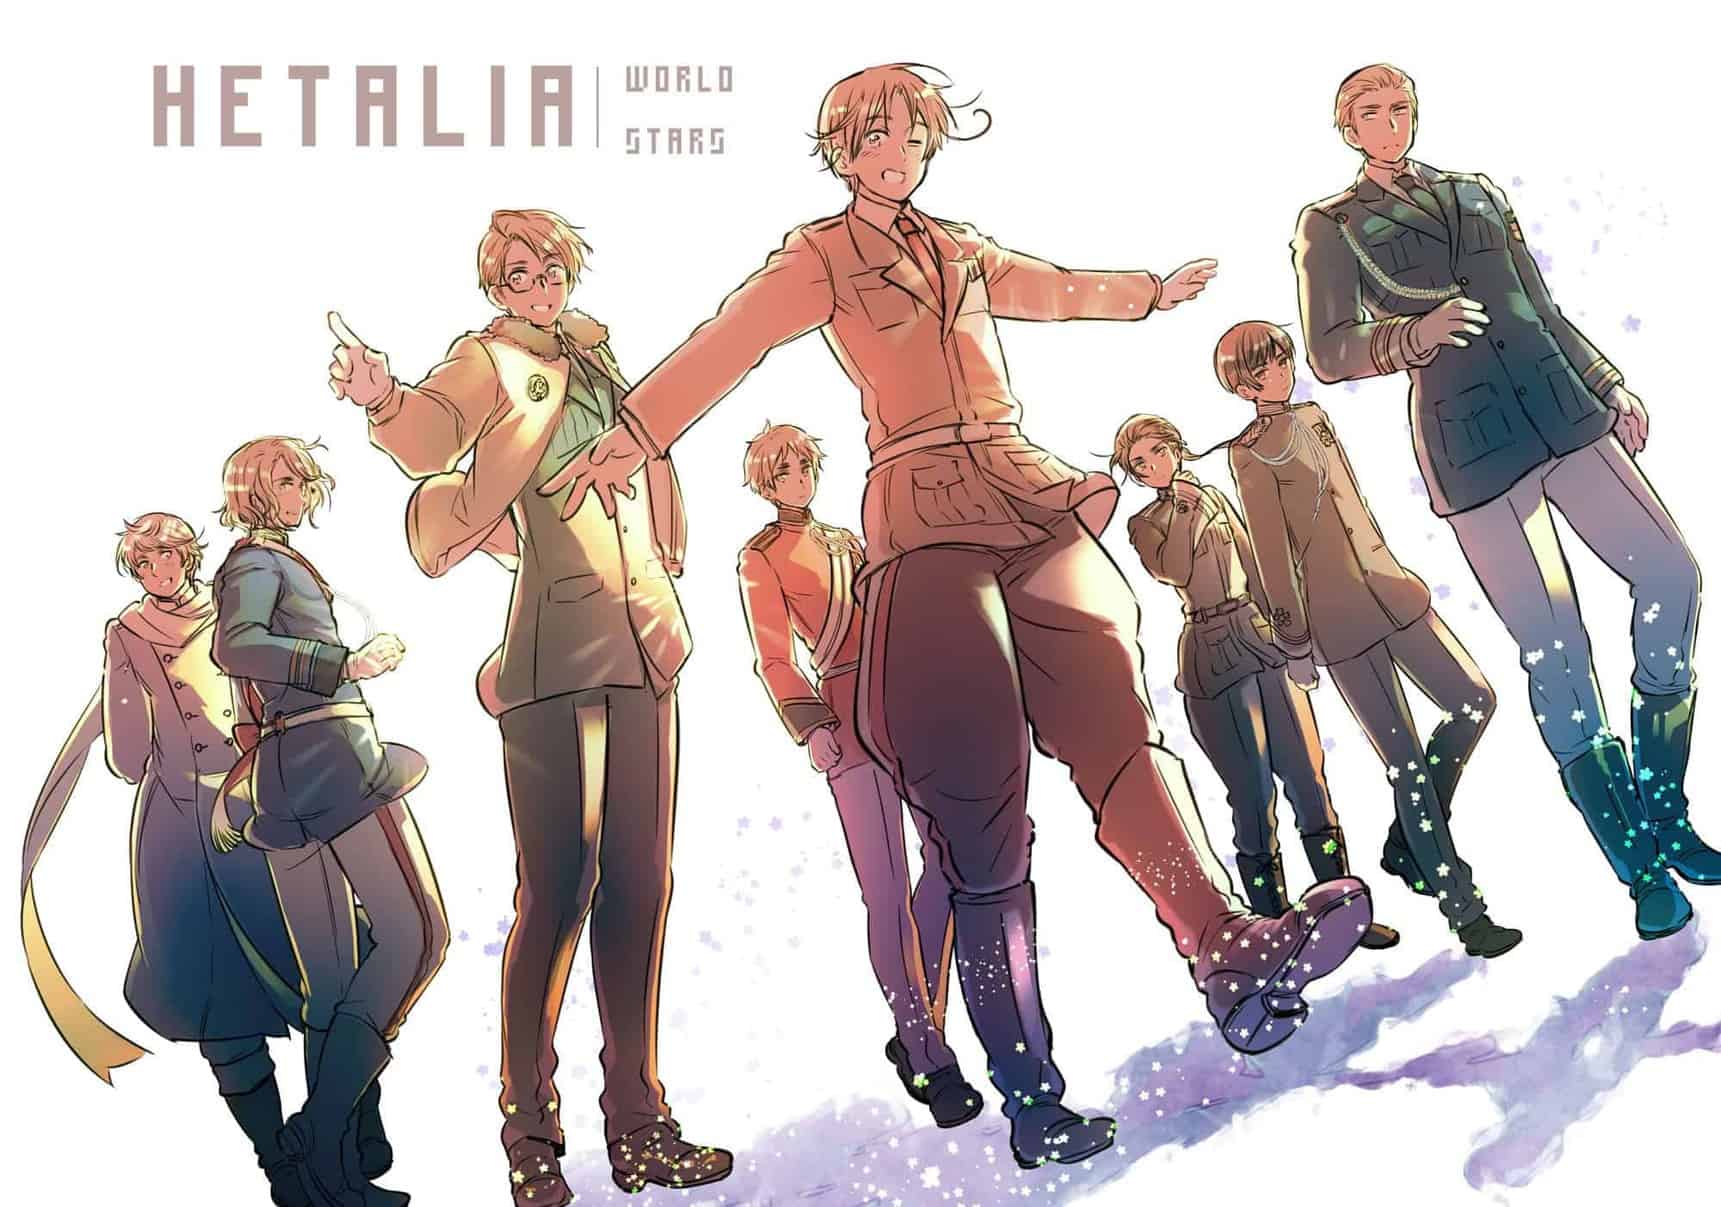 Hetalia World Stars Anime Release Date Teaser The Awesome One